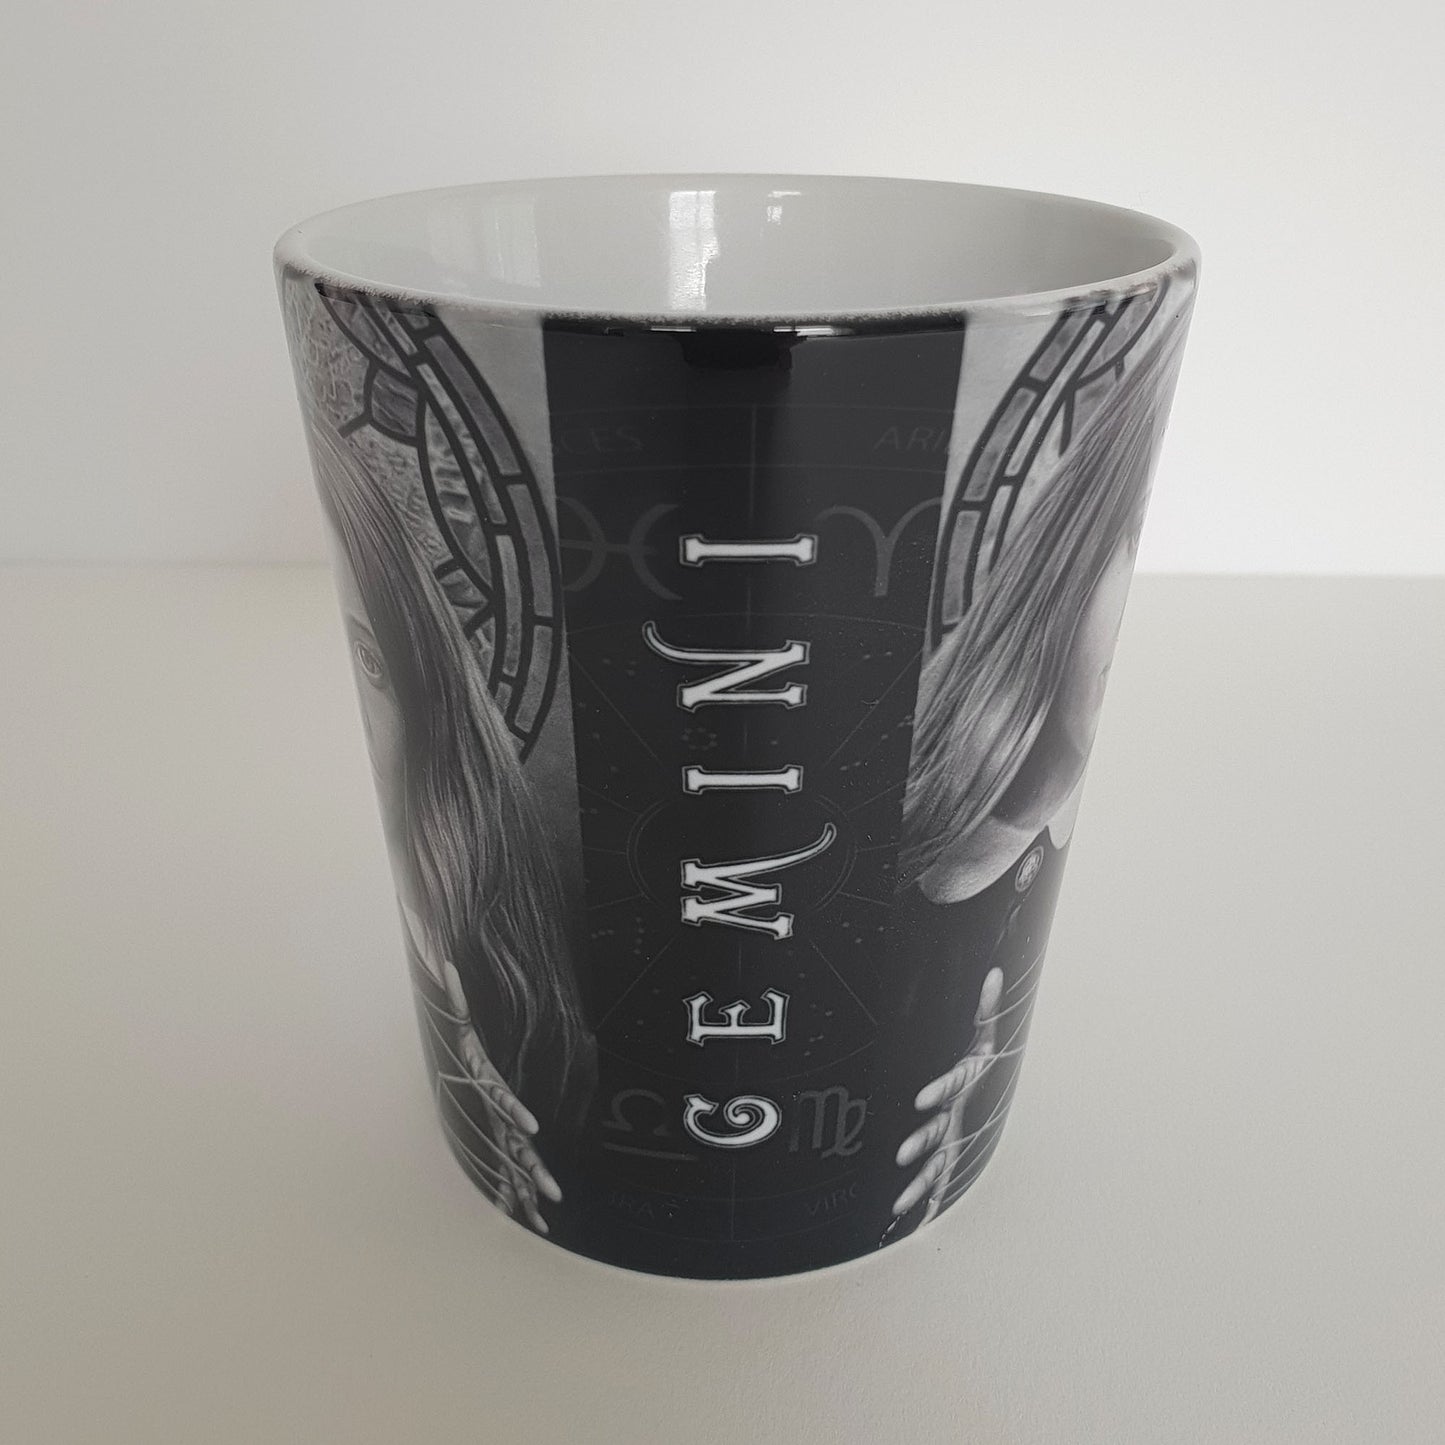 'Gemini' ceramic mug